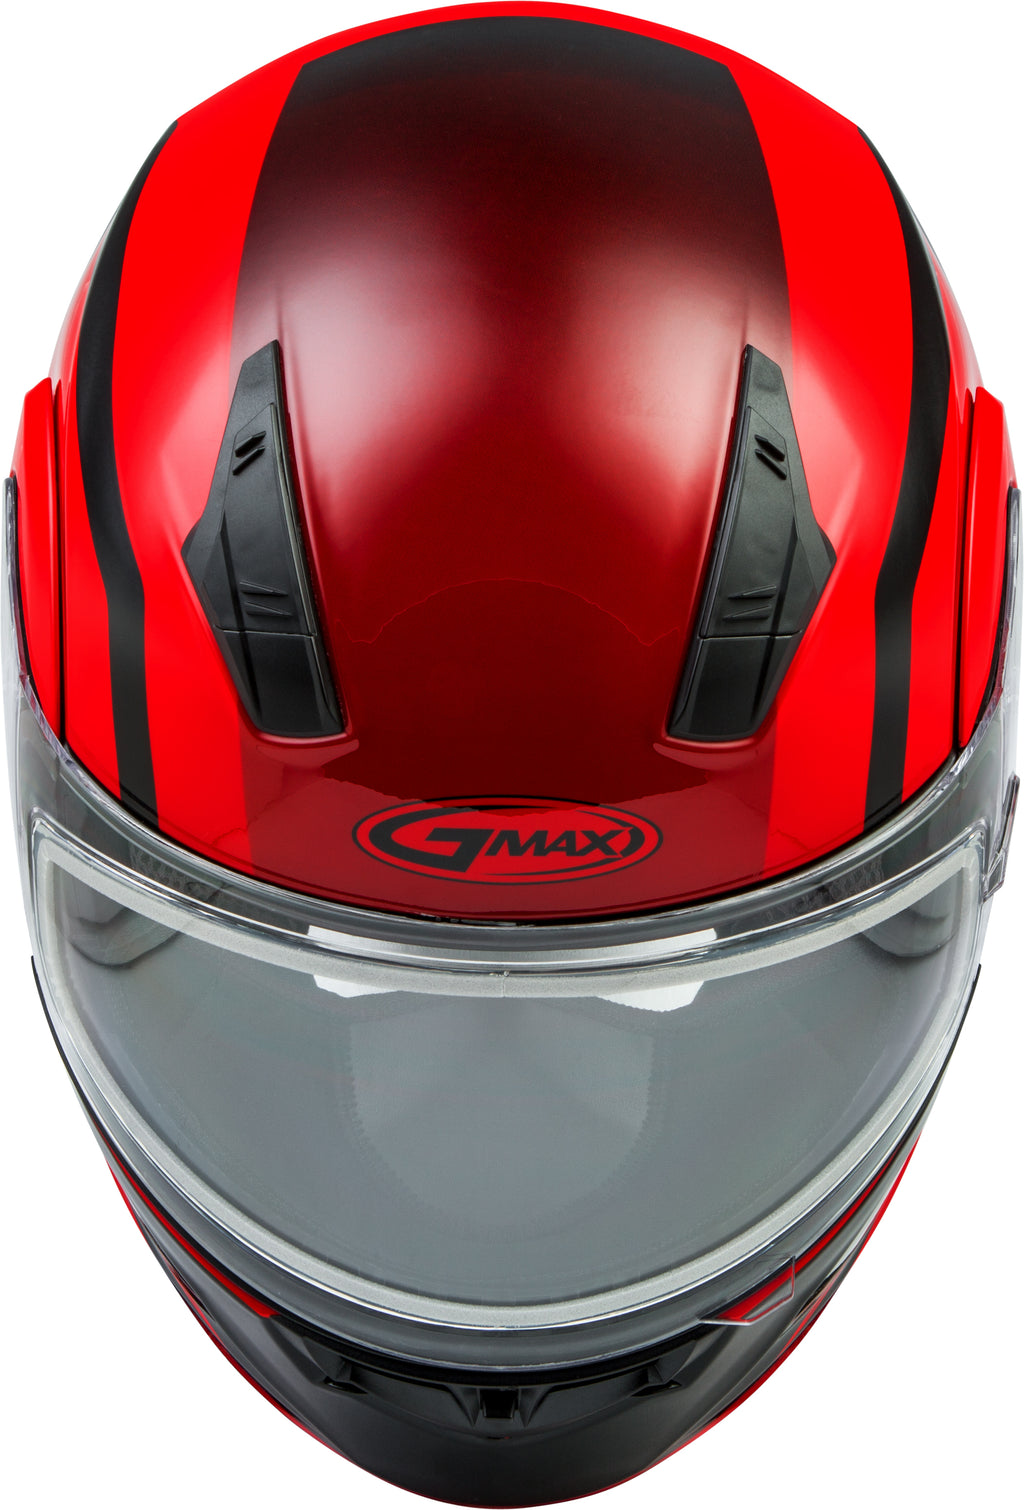 Md 04s Modular Docket Snow Helmet Red/Black 3x